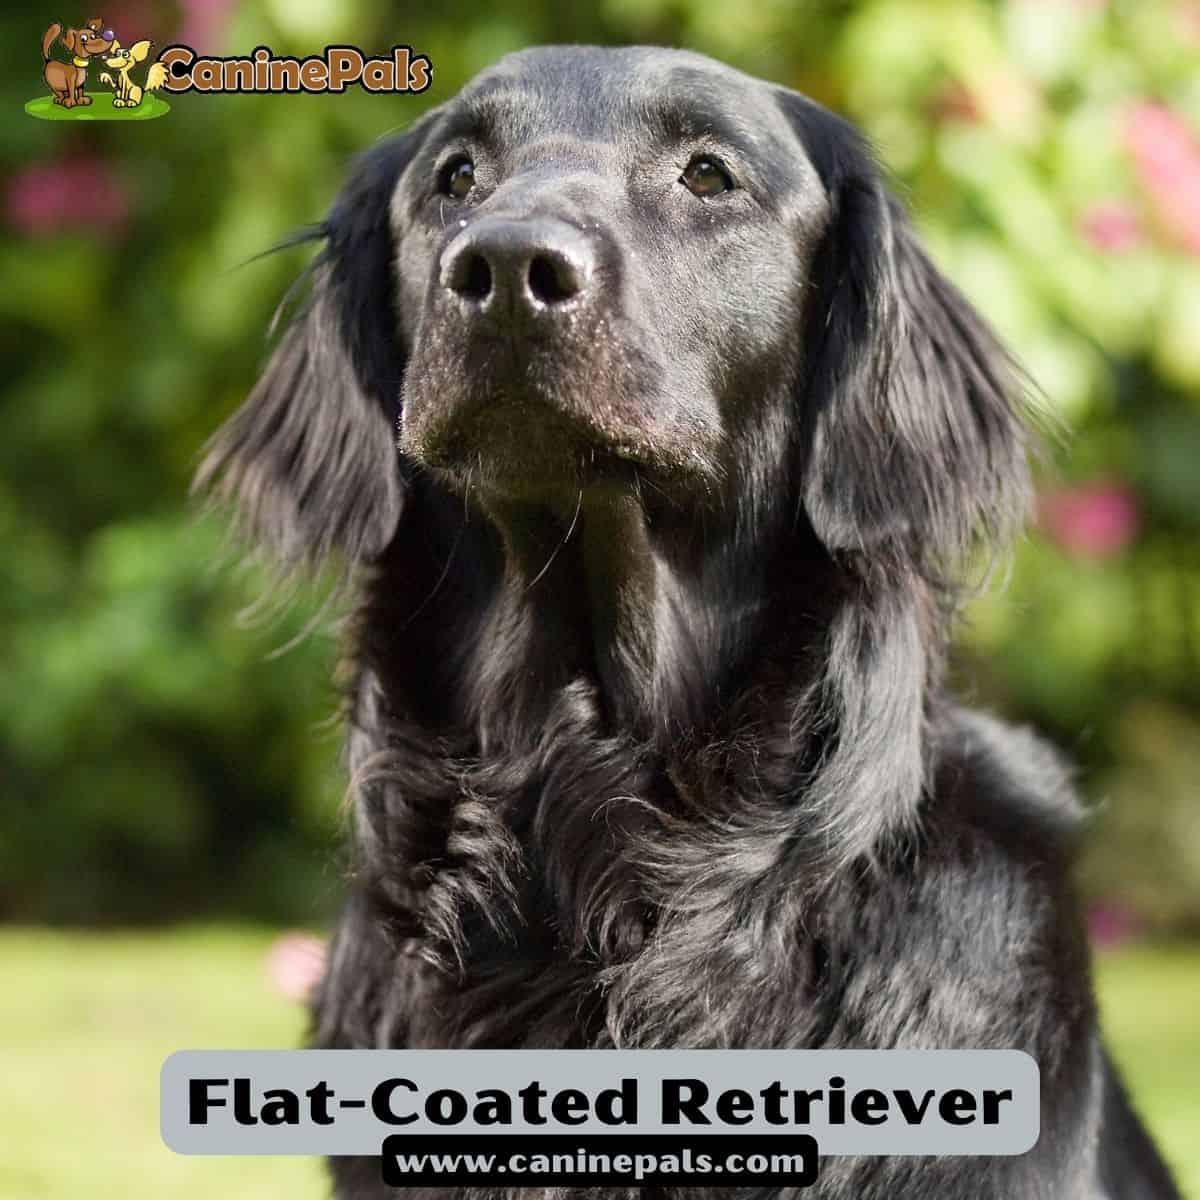 Flat-Coated Retriever